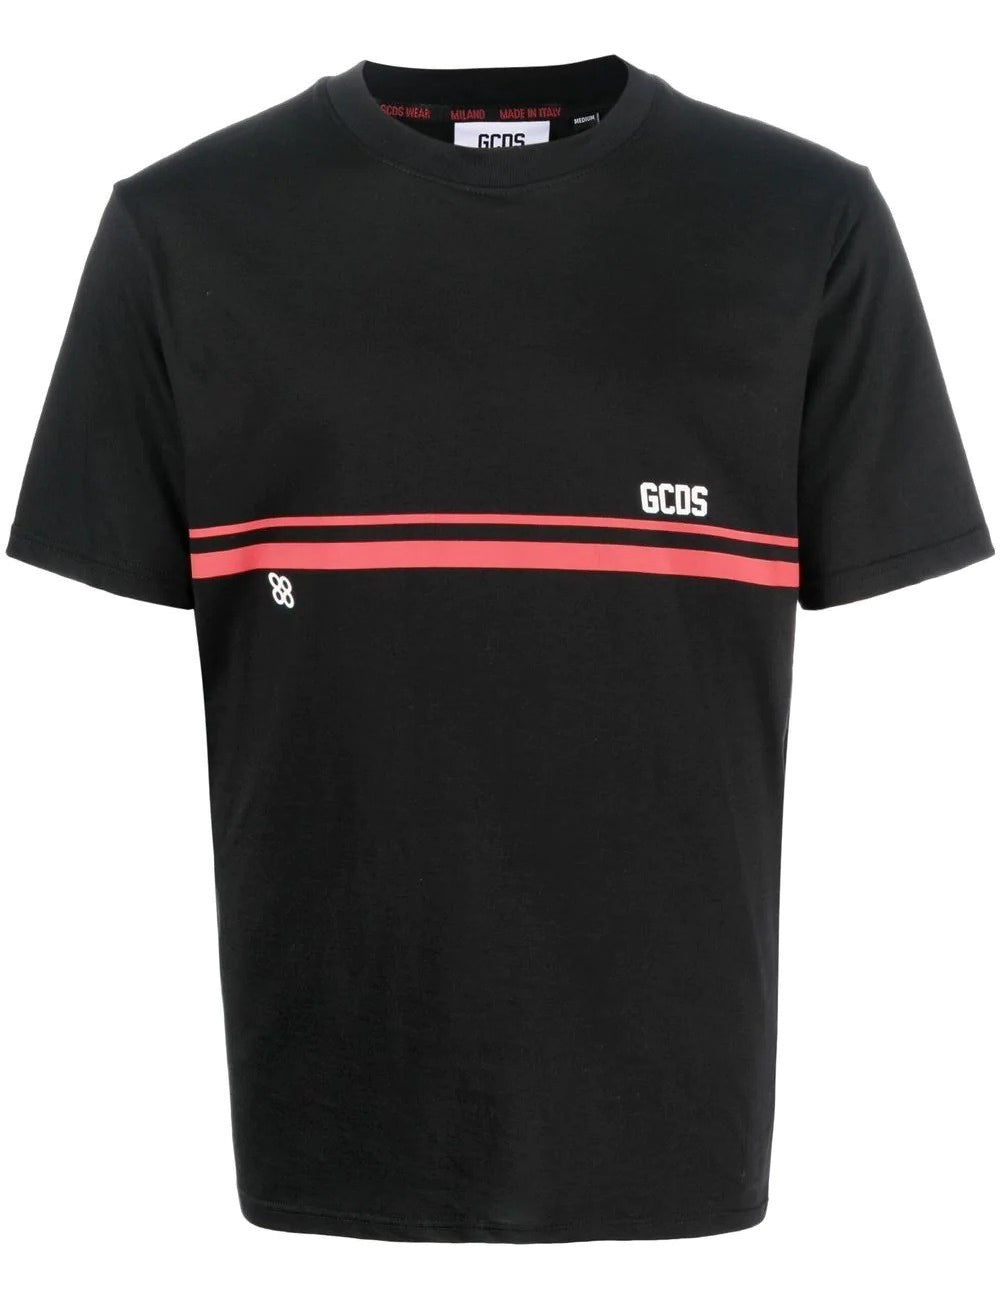 gcds-low-logo-band-t-shirt.jpg